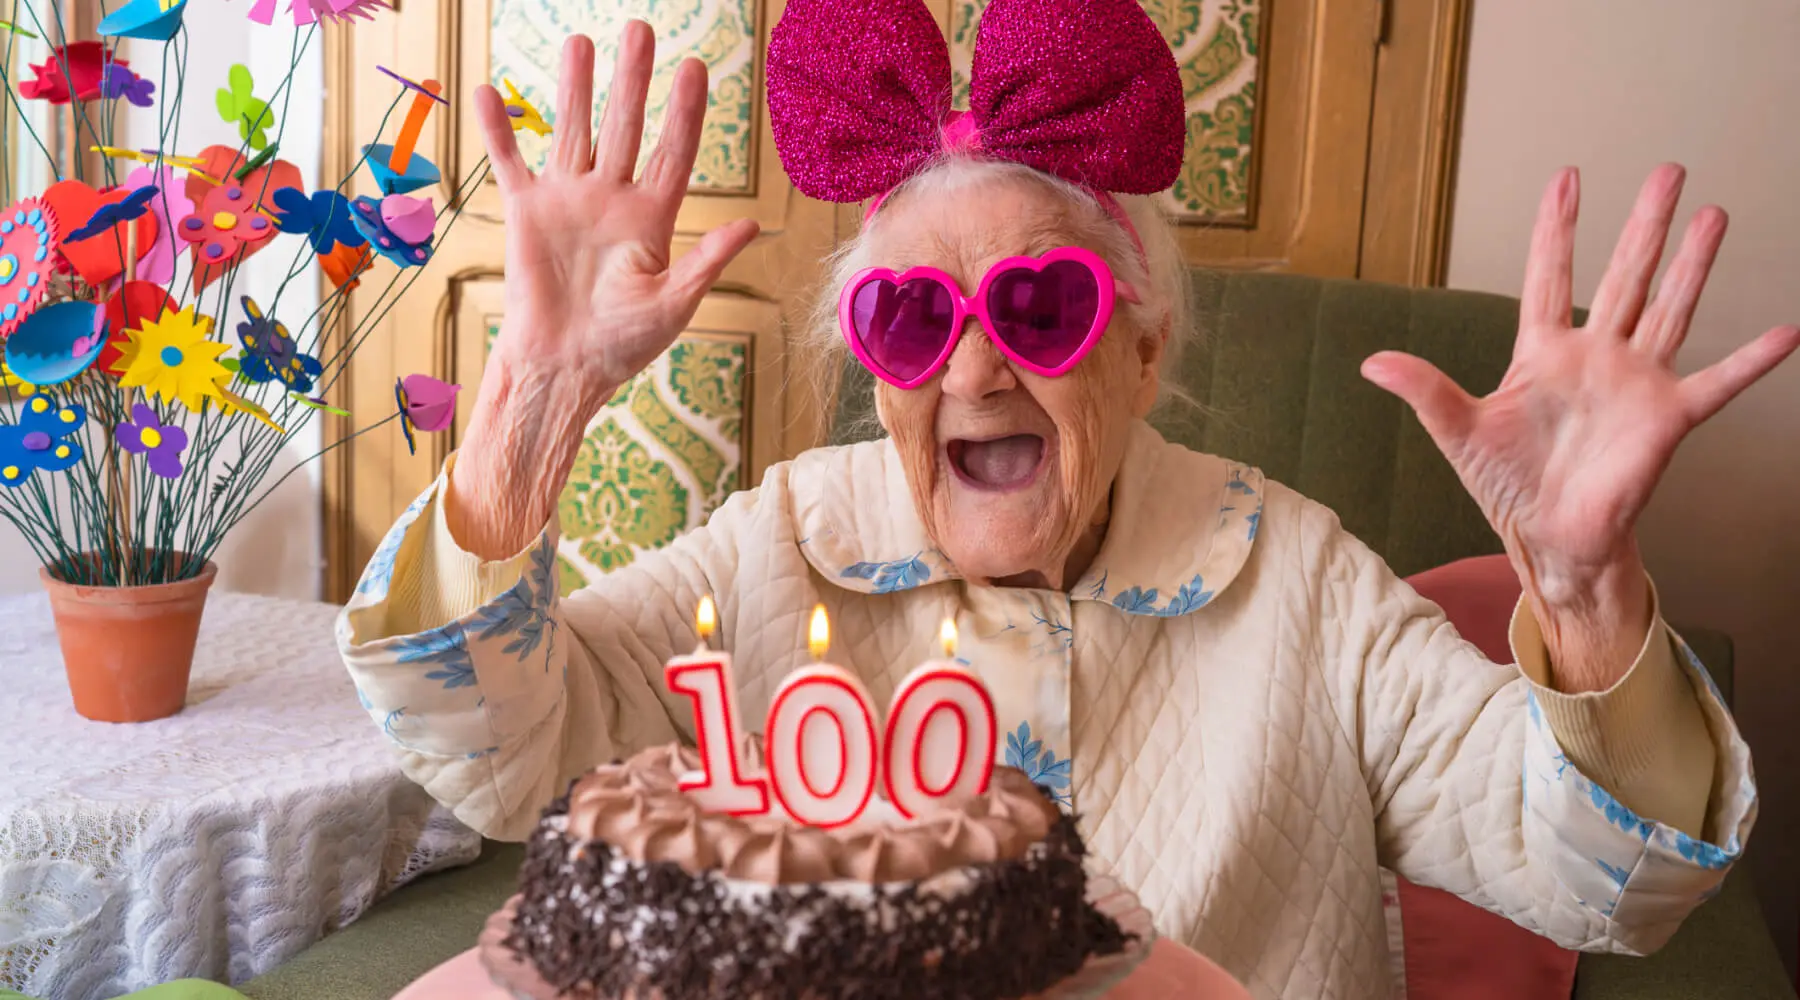 Elderly woman wearing heart shaped sunglasses and a ribbon headband celebrating her 100th birthday